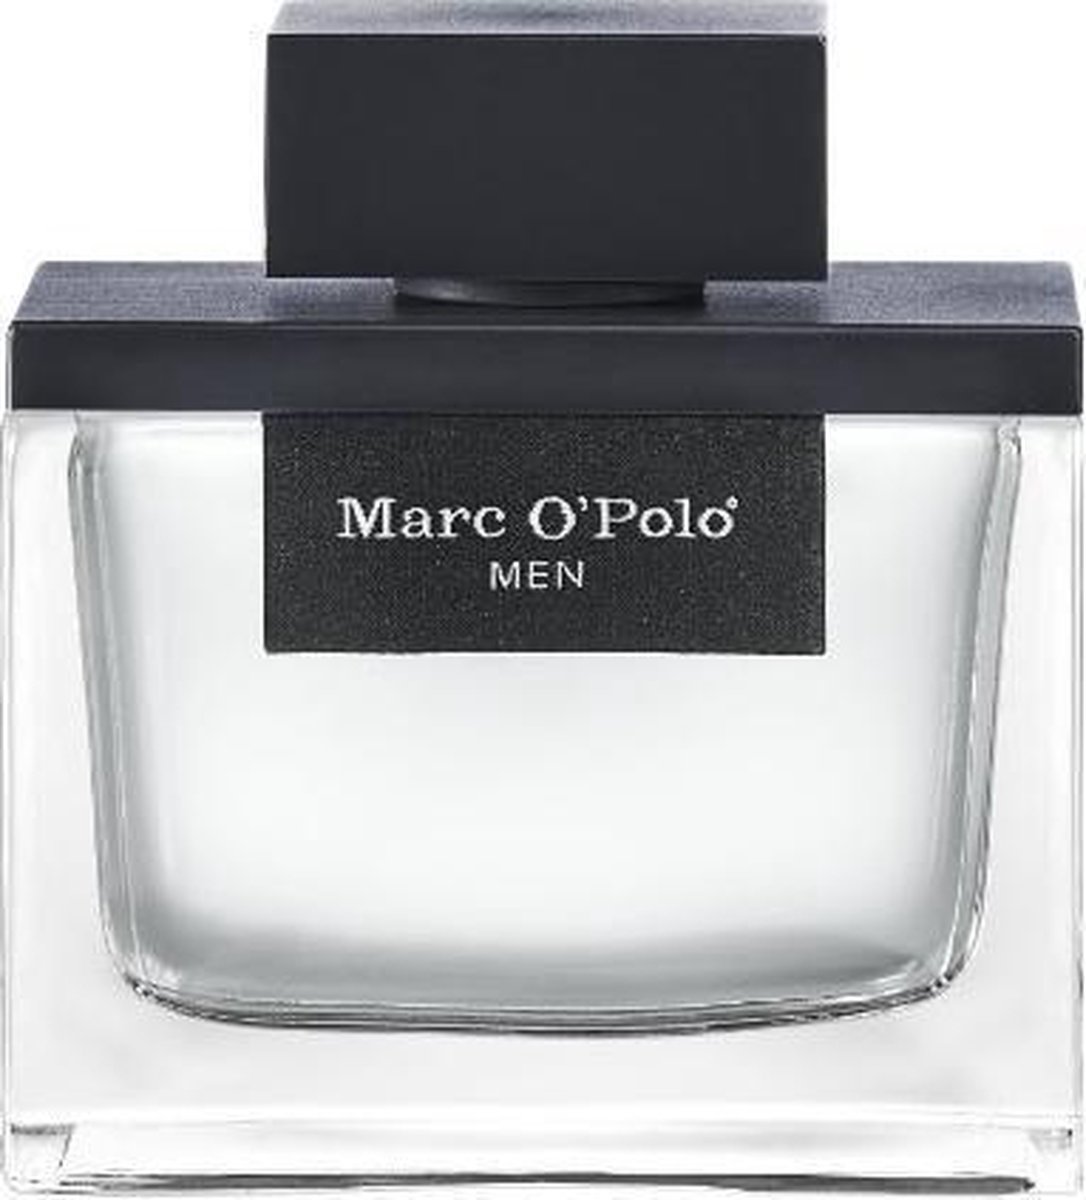 Marc O'Polo Marc O'Polo - Eau de toilette - Men - 90 ml | bol